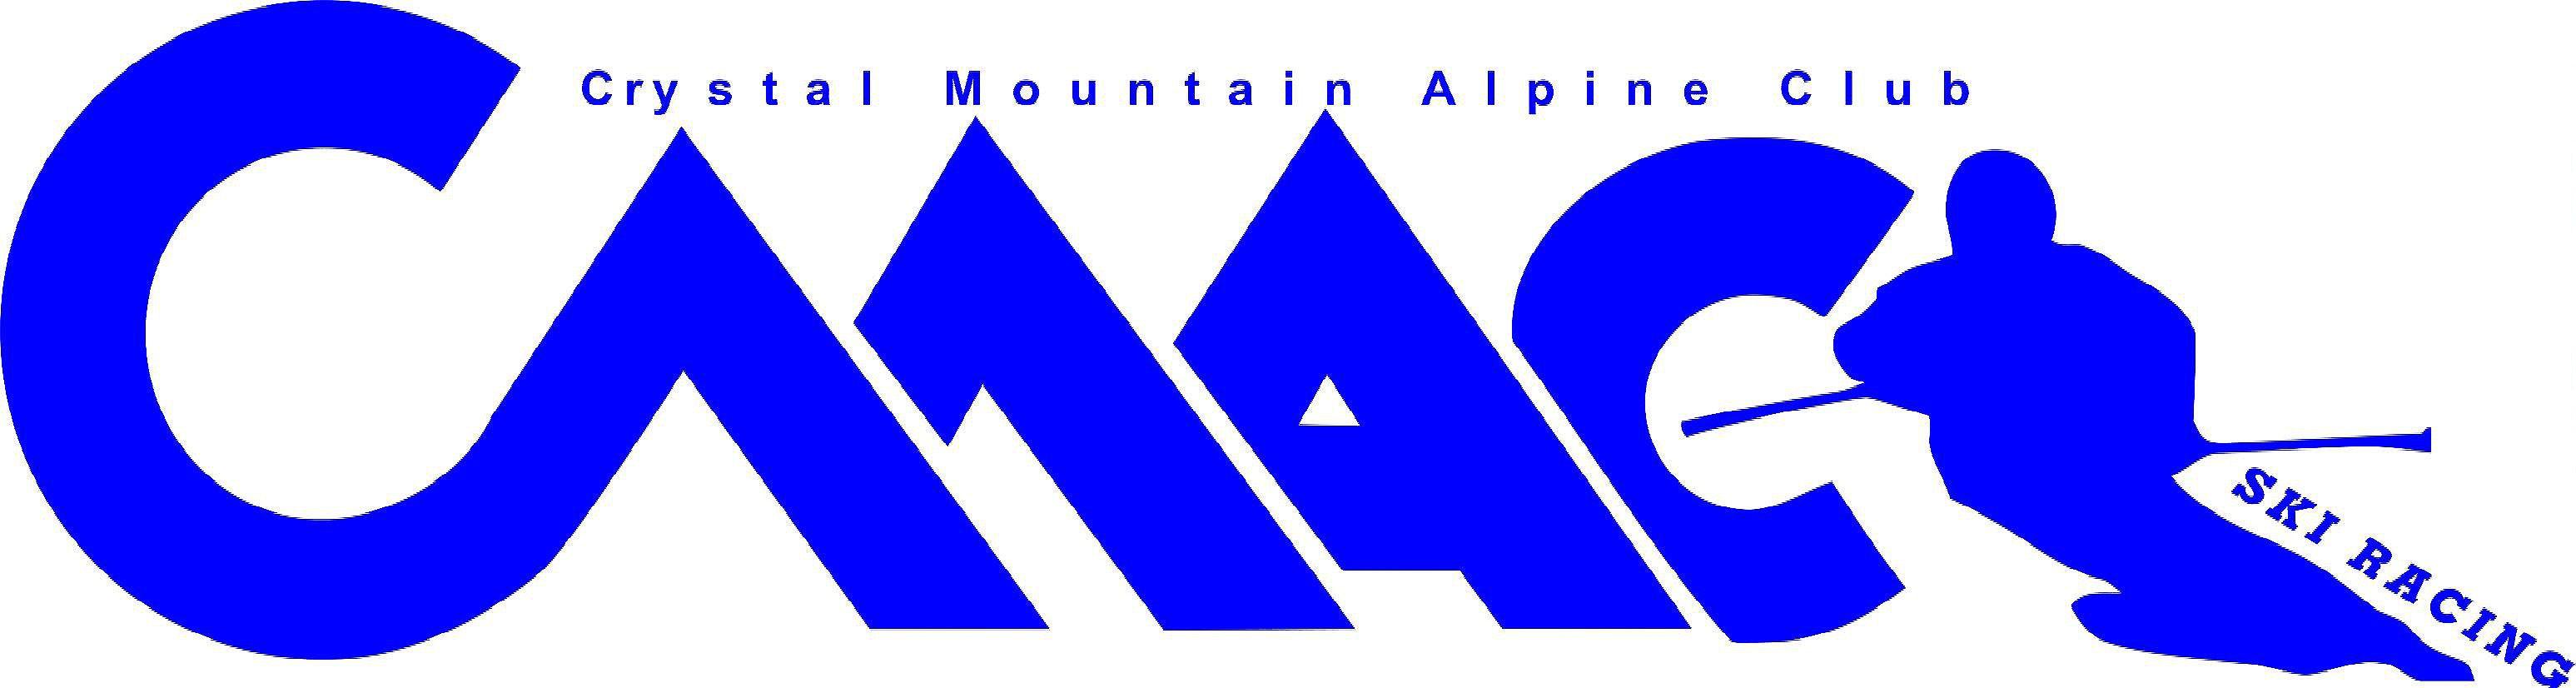 Crystal Mountain Logo - Crystal Mountain Alpine Club (CMAC) - CMAC Hats/Hoodies/Shirts/Etc.